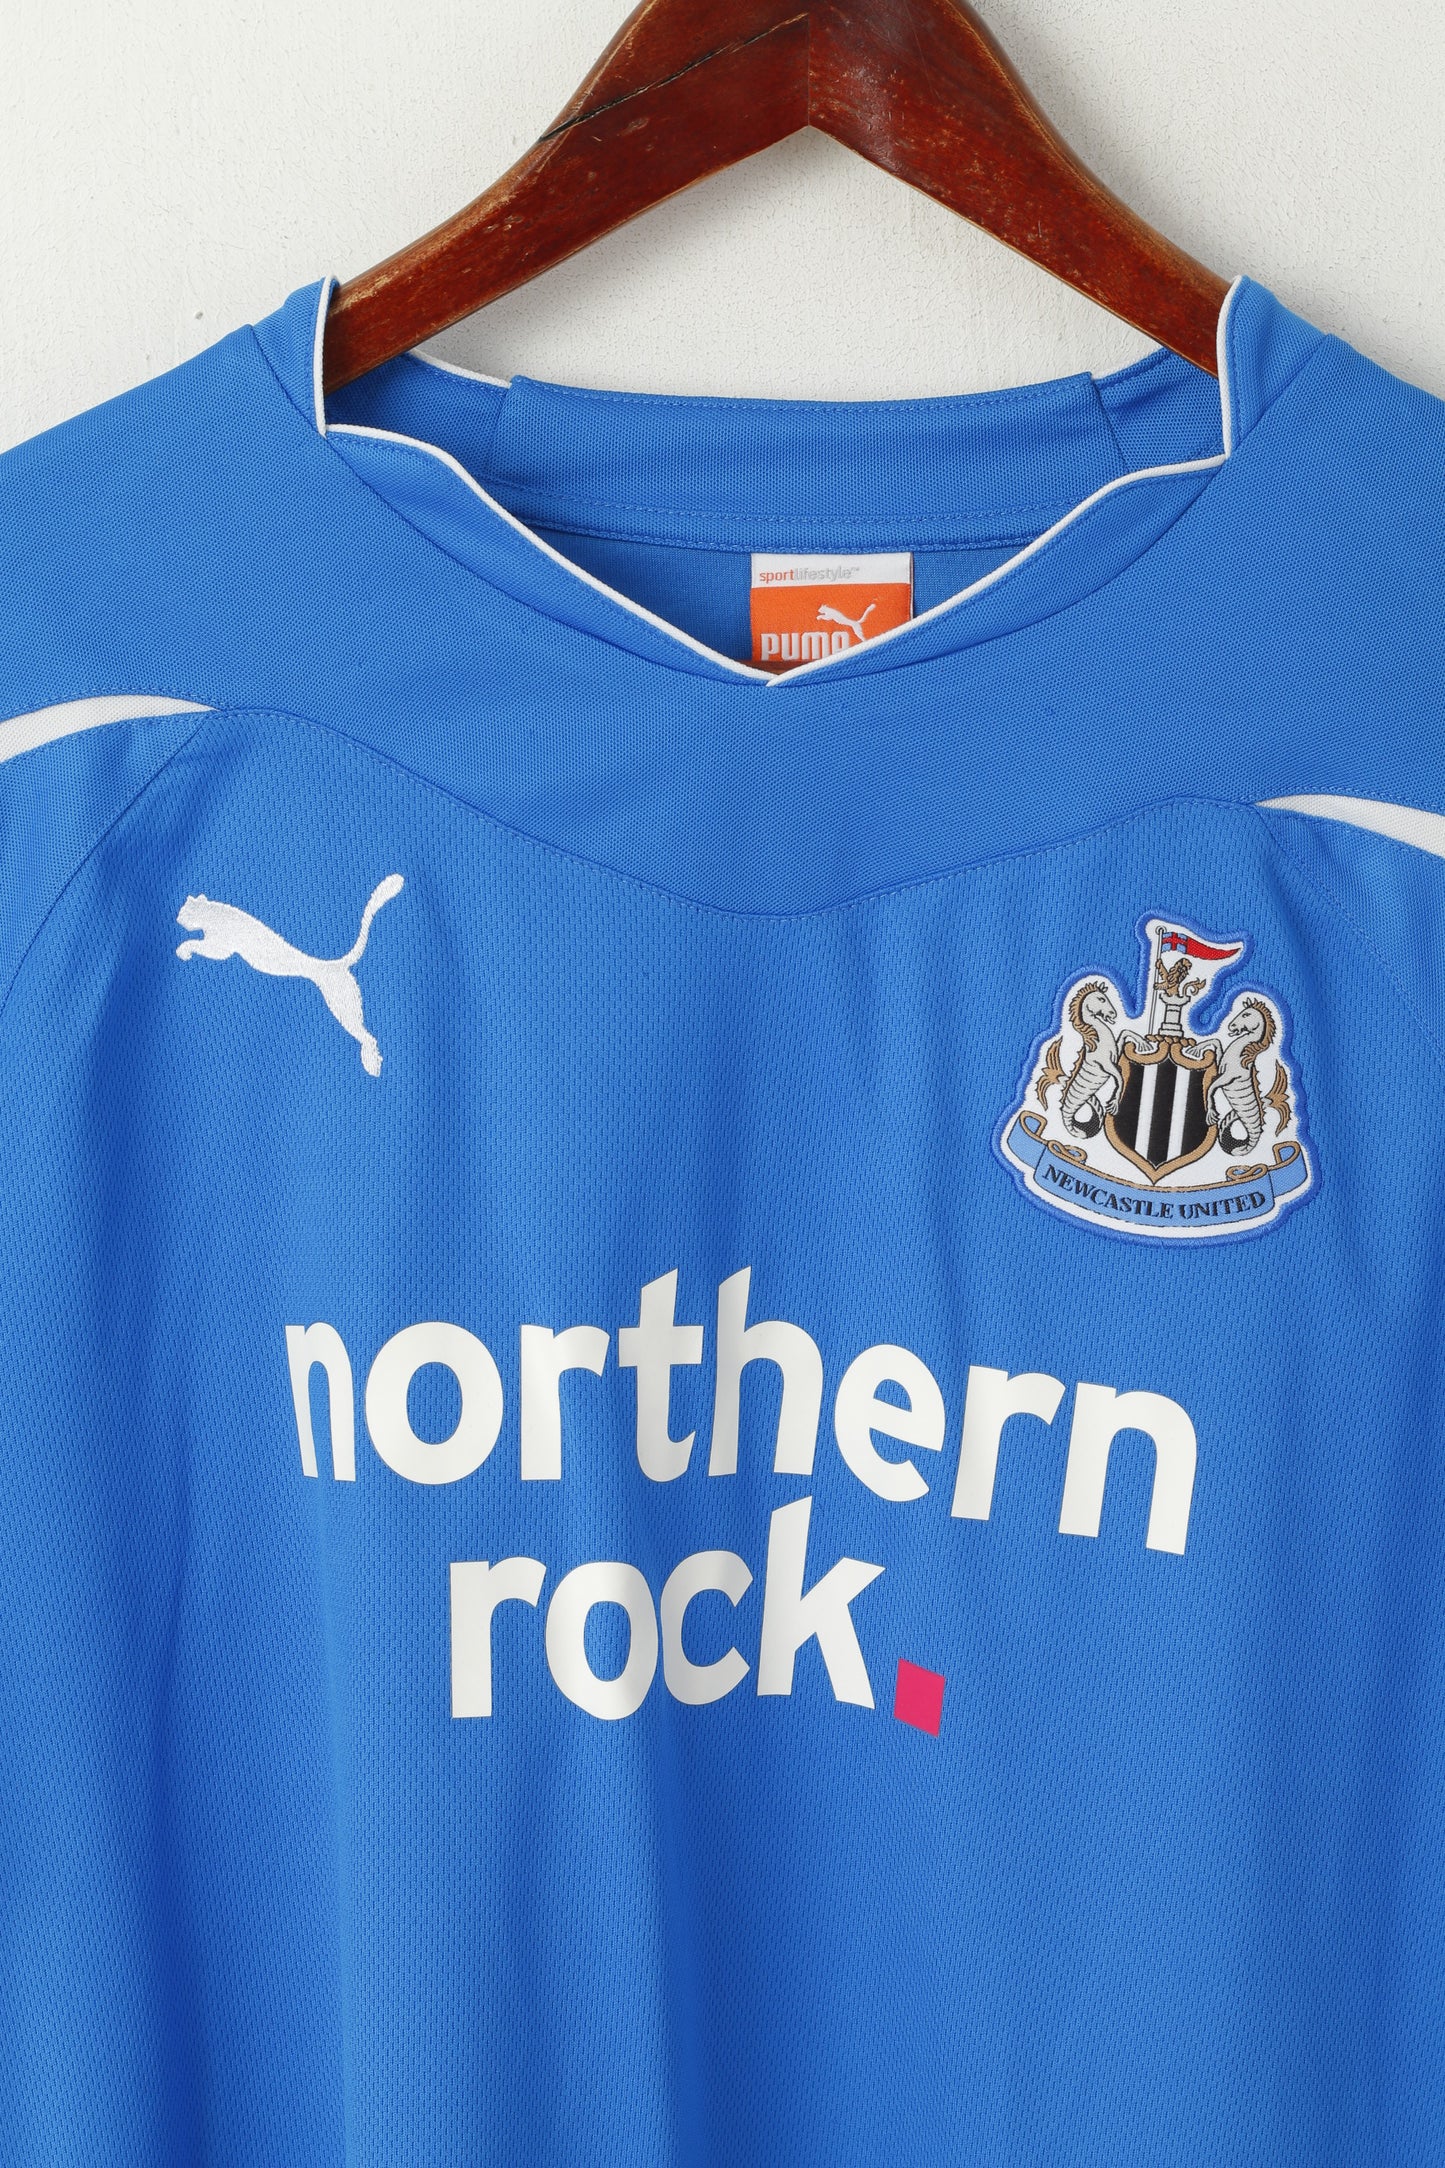 Puma Newcastle United Men S Shirt Blue Football Club Toon Army Jersey Top